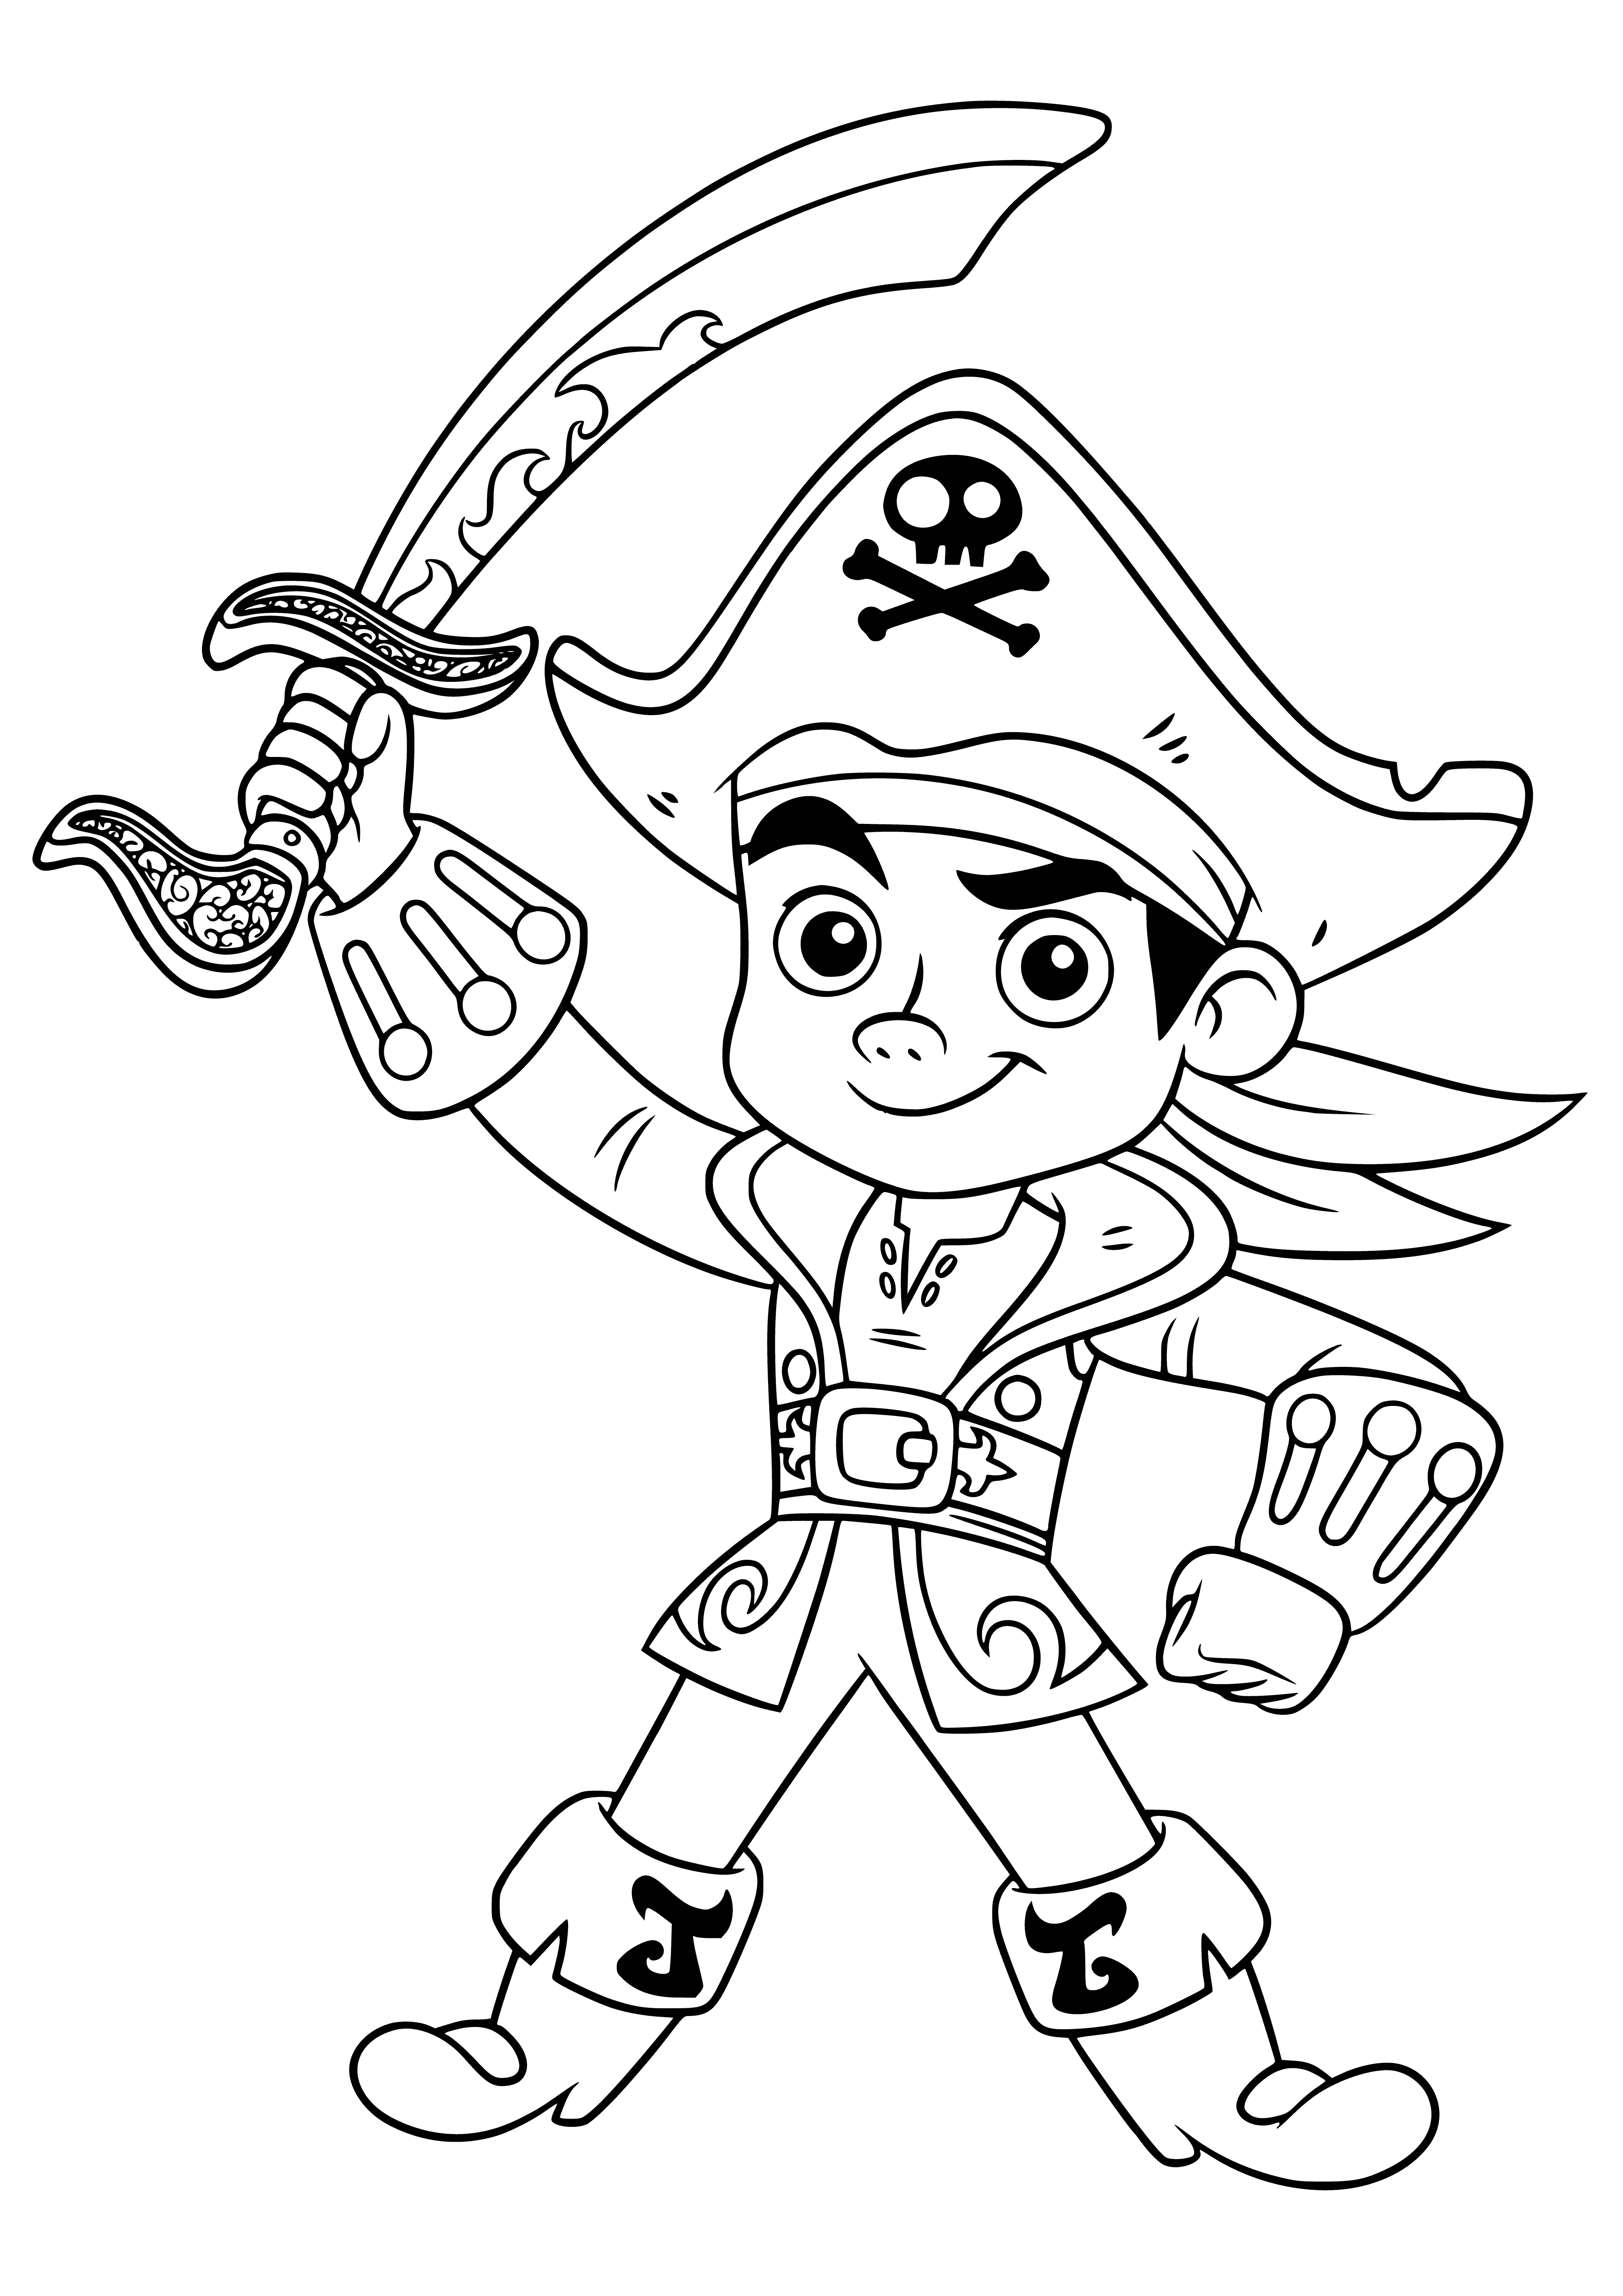 Pirate Jake coloring page